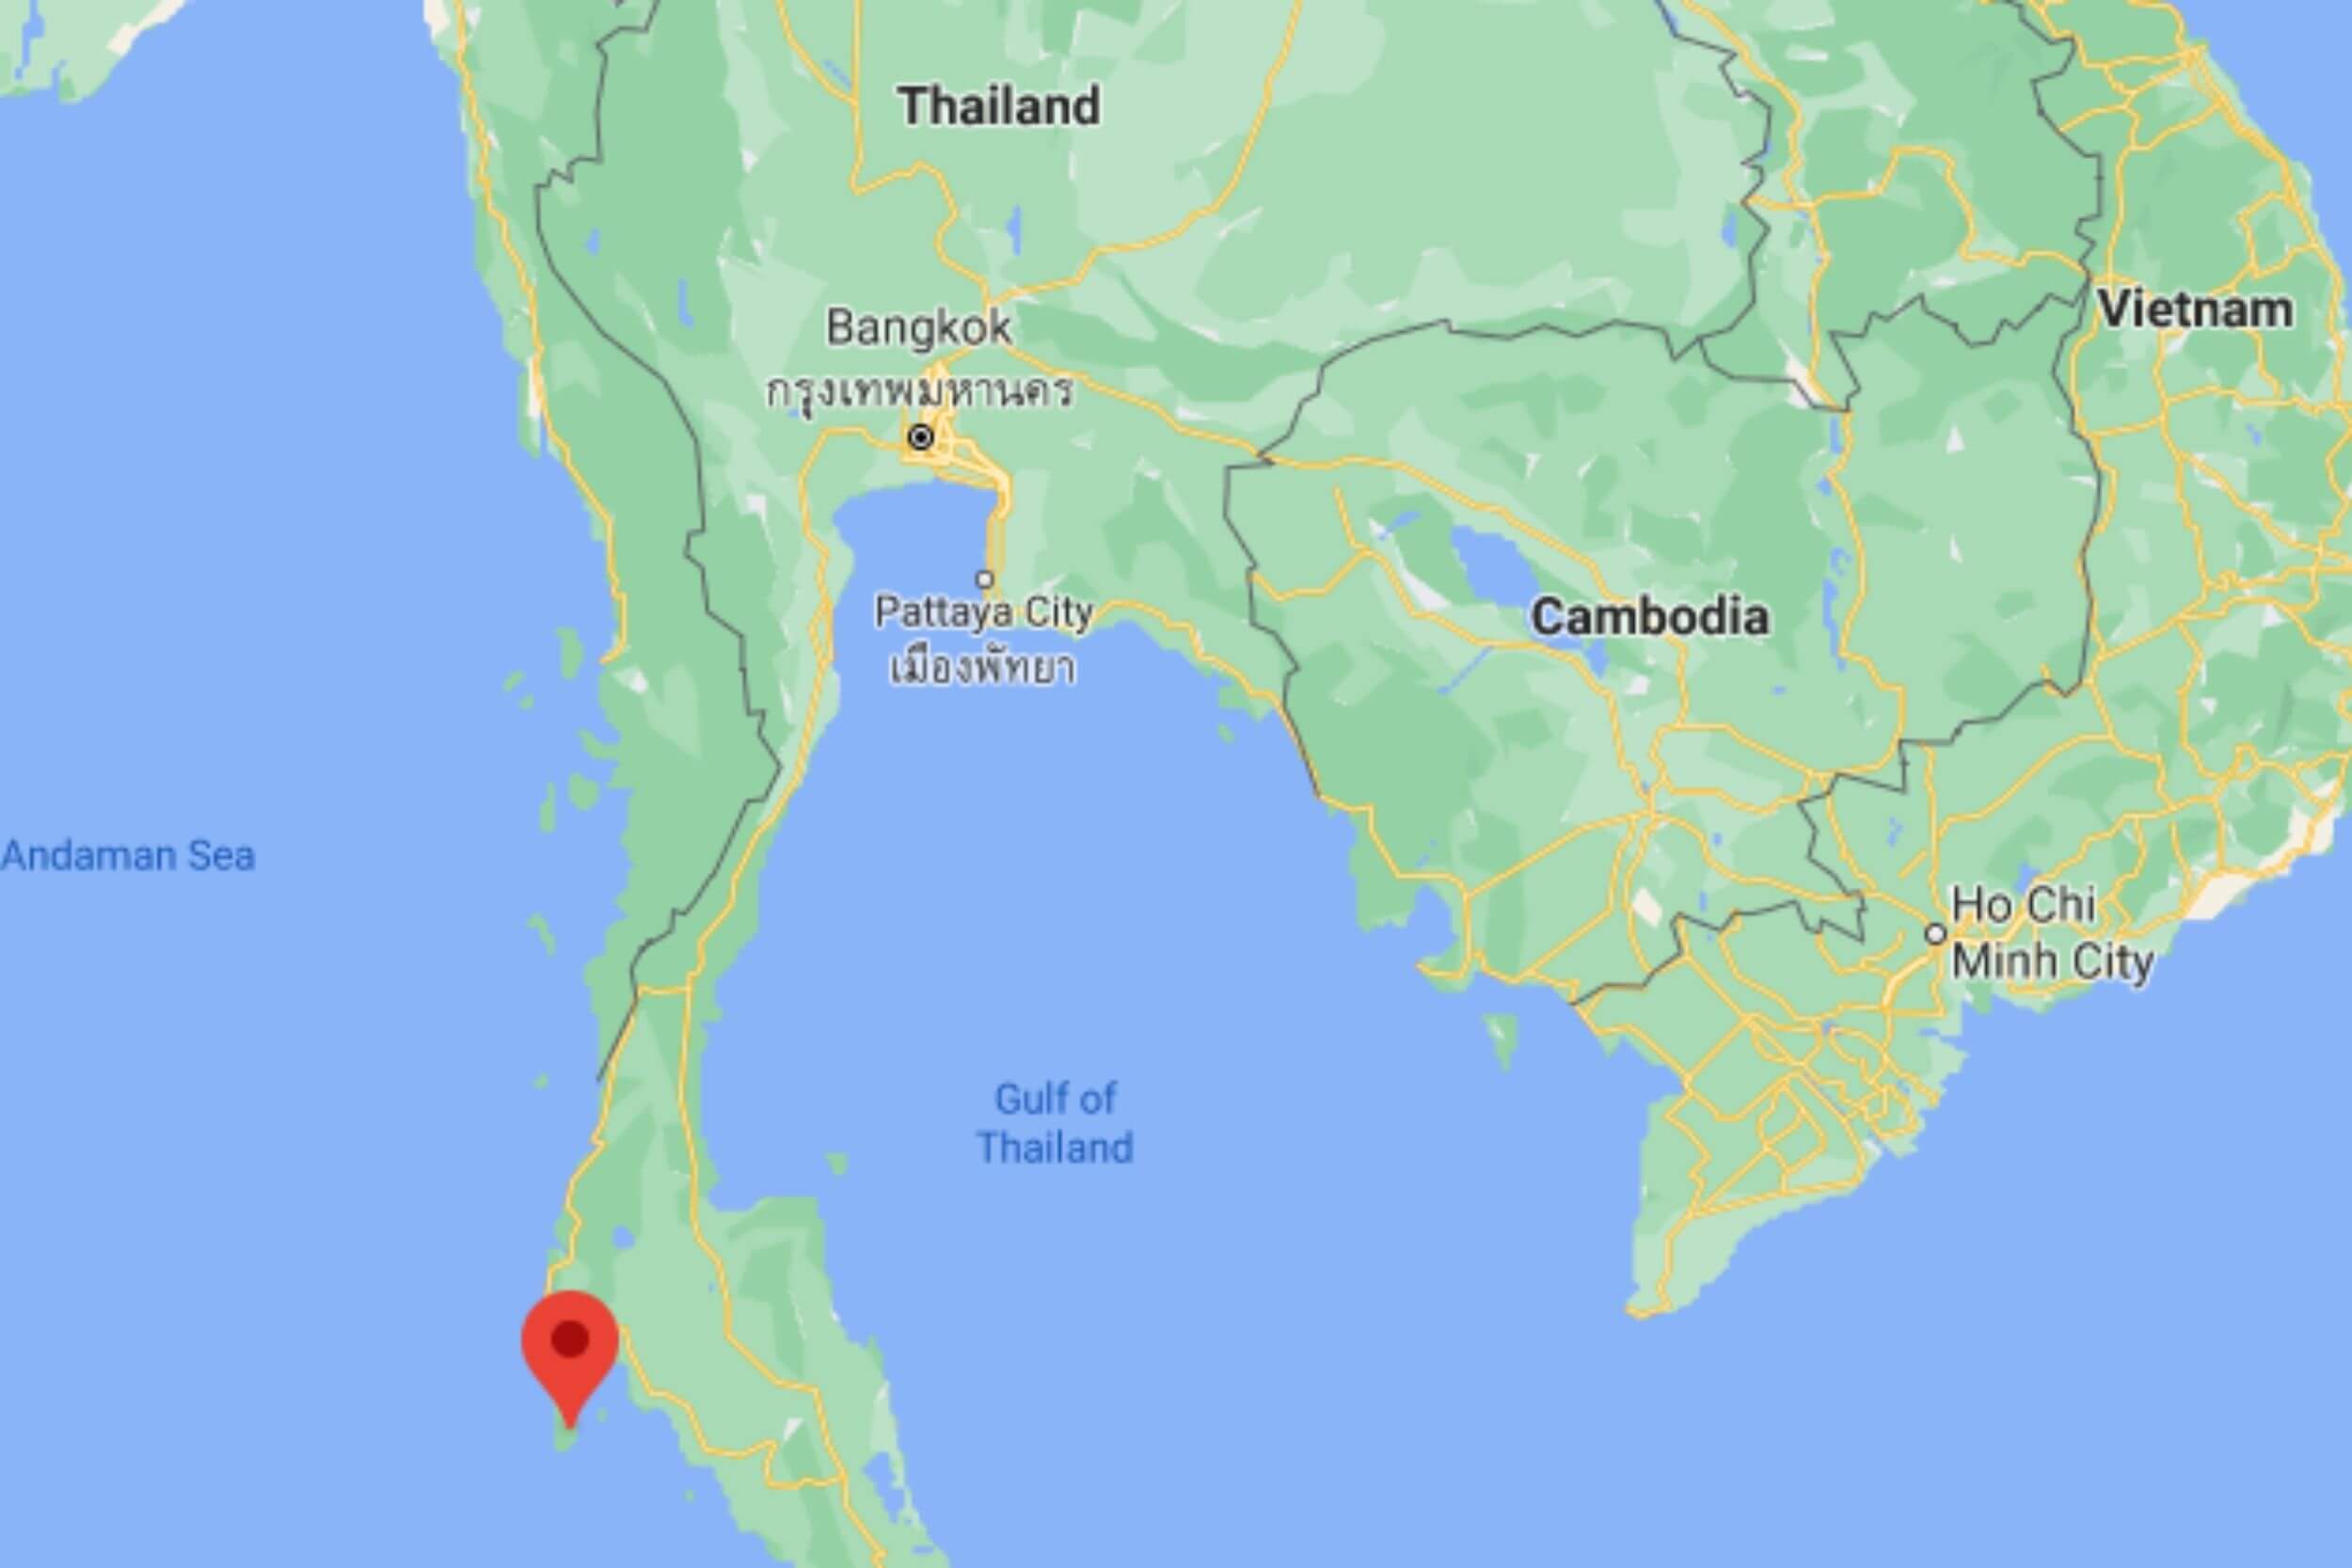 Map of Phuket